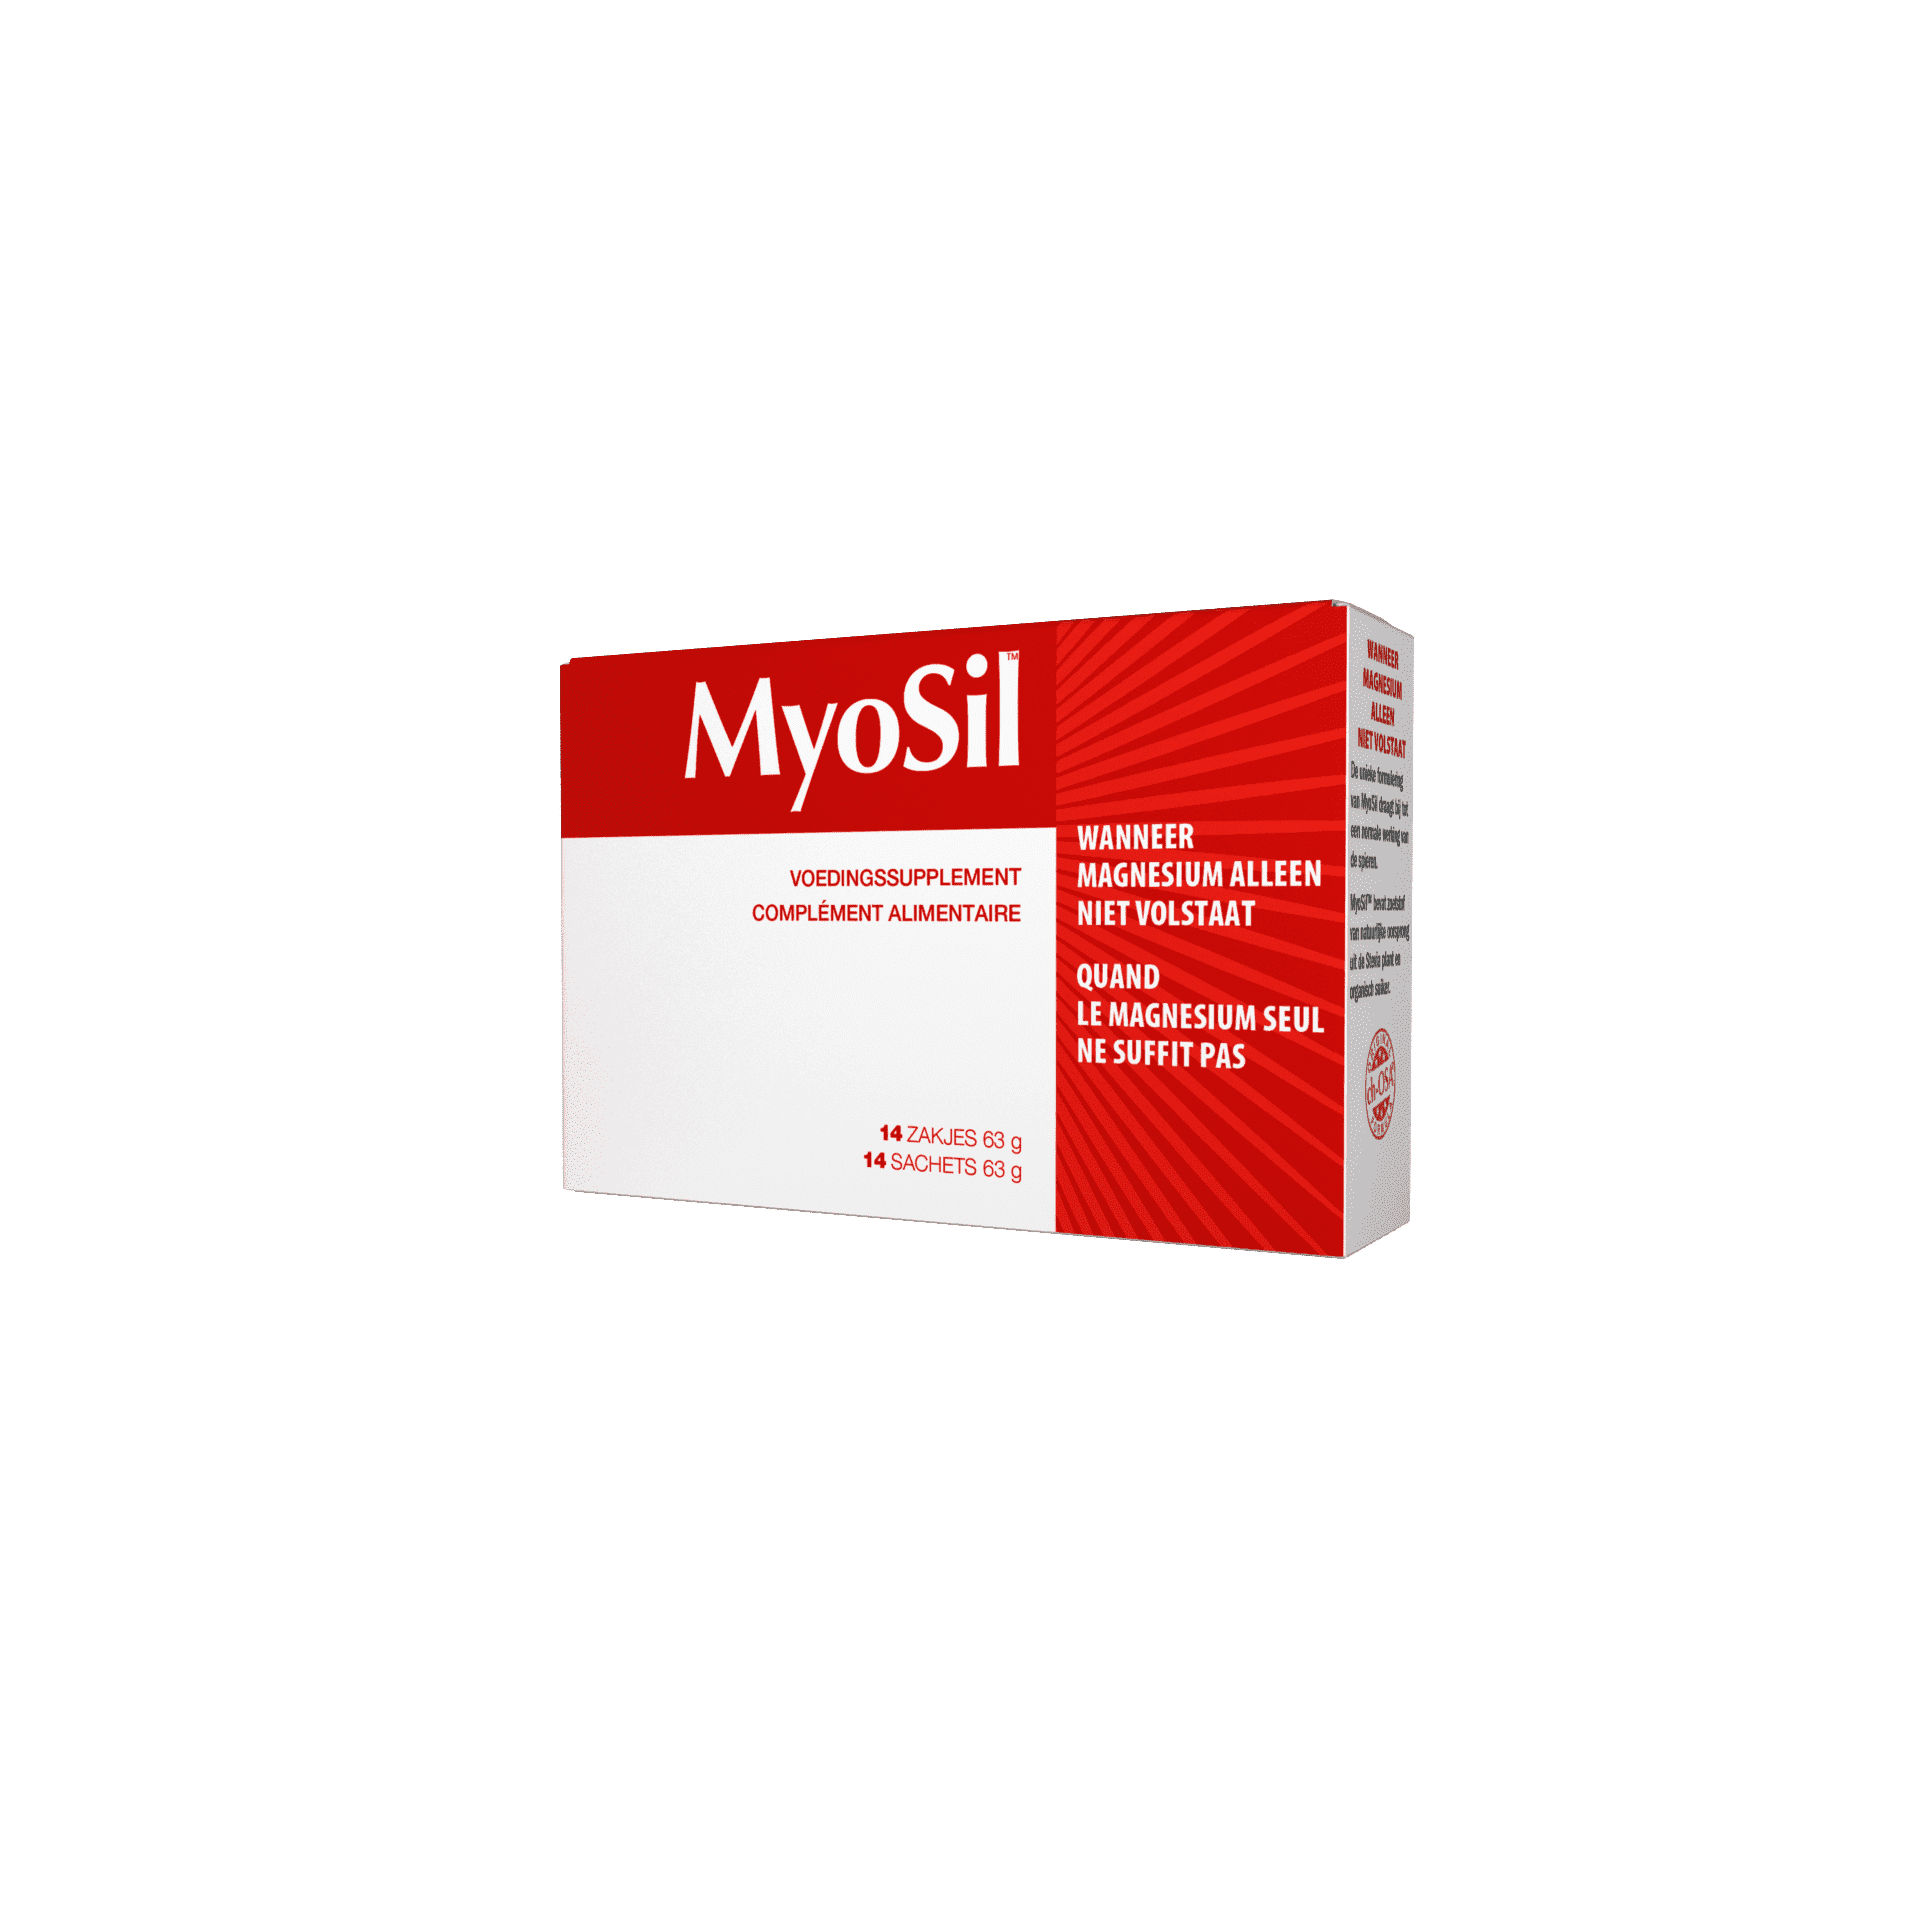 Myosil 14 sachets